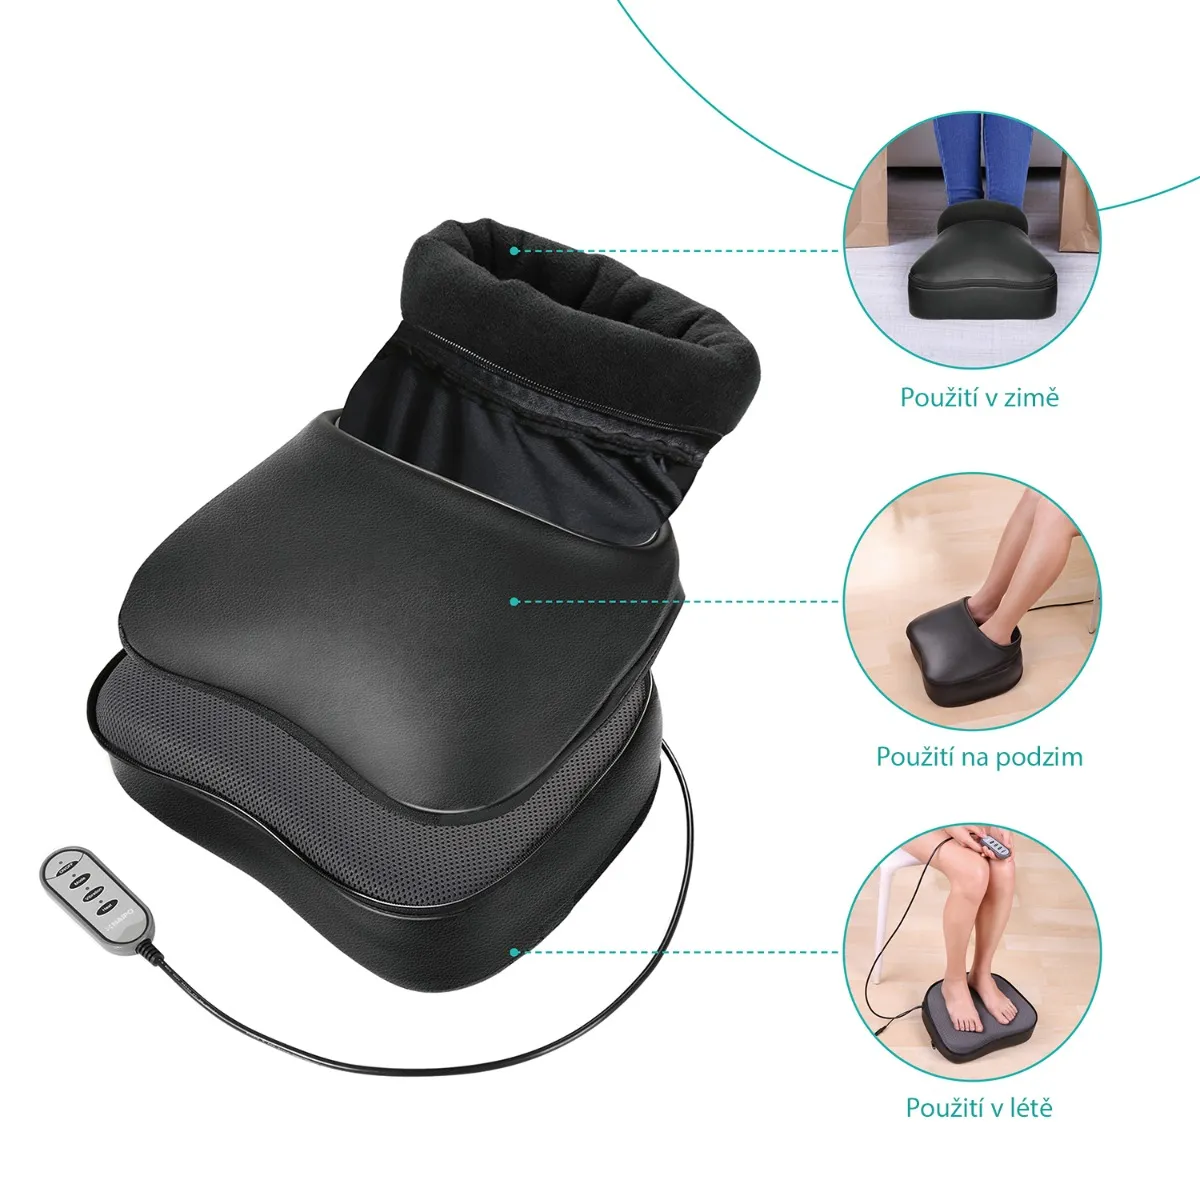 NAIPO MGF-1005 masážní přístroj na chodidla